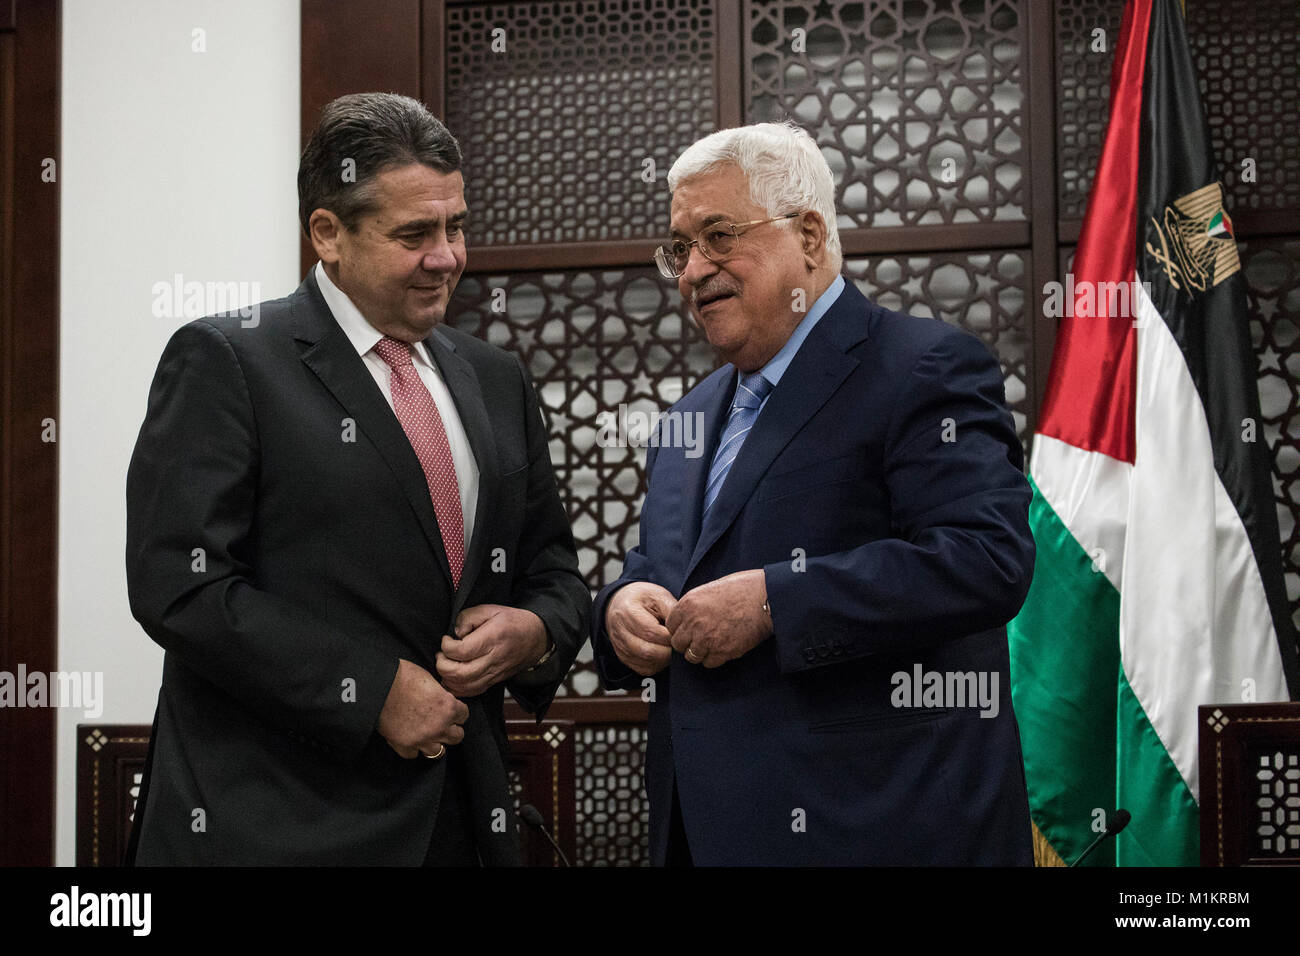 Ramallah, West Bank. 31st Jan, 2018. Palestinian President Mahmoud Abbas (Abu Mazen) meets with German Foreign Minister Sigmar Gabriel (L) in Ramallah, West Bank, 31 January 2018. Credit: Ilia Yefimovich/dpa/Alamy Live News Stock Photo